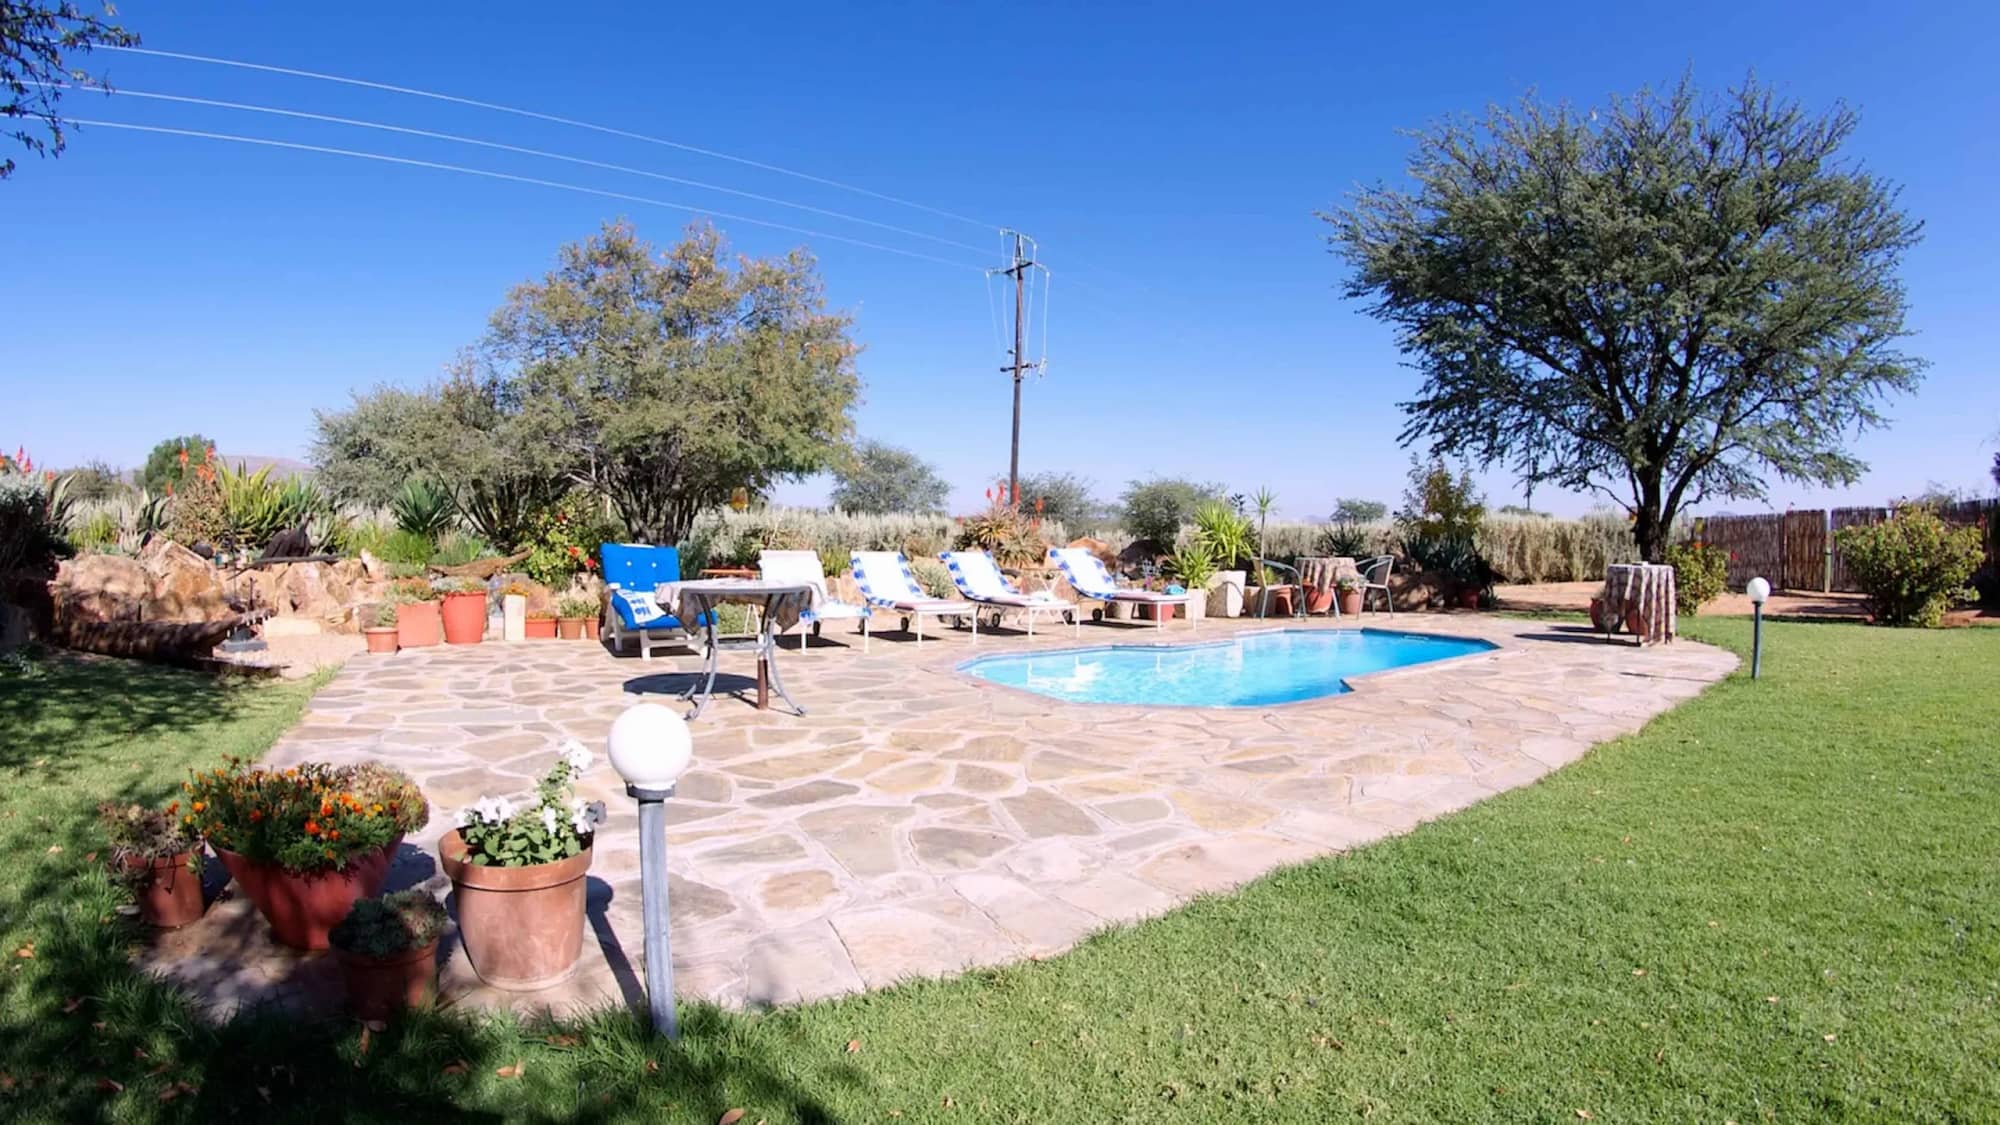 Etango-Ranch-Guestfarm-Resdest-Namibia-Windhoek-Airport-SwimmingPool1